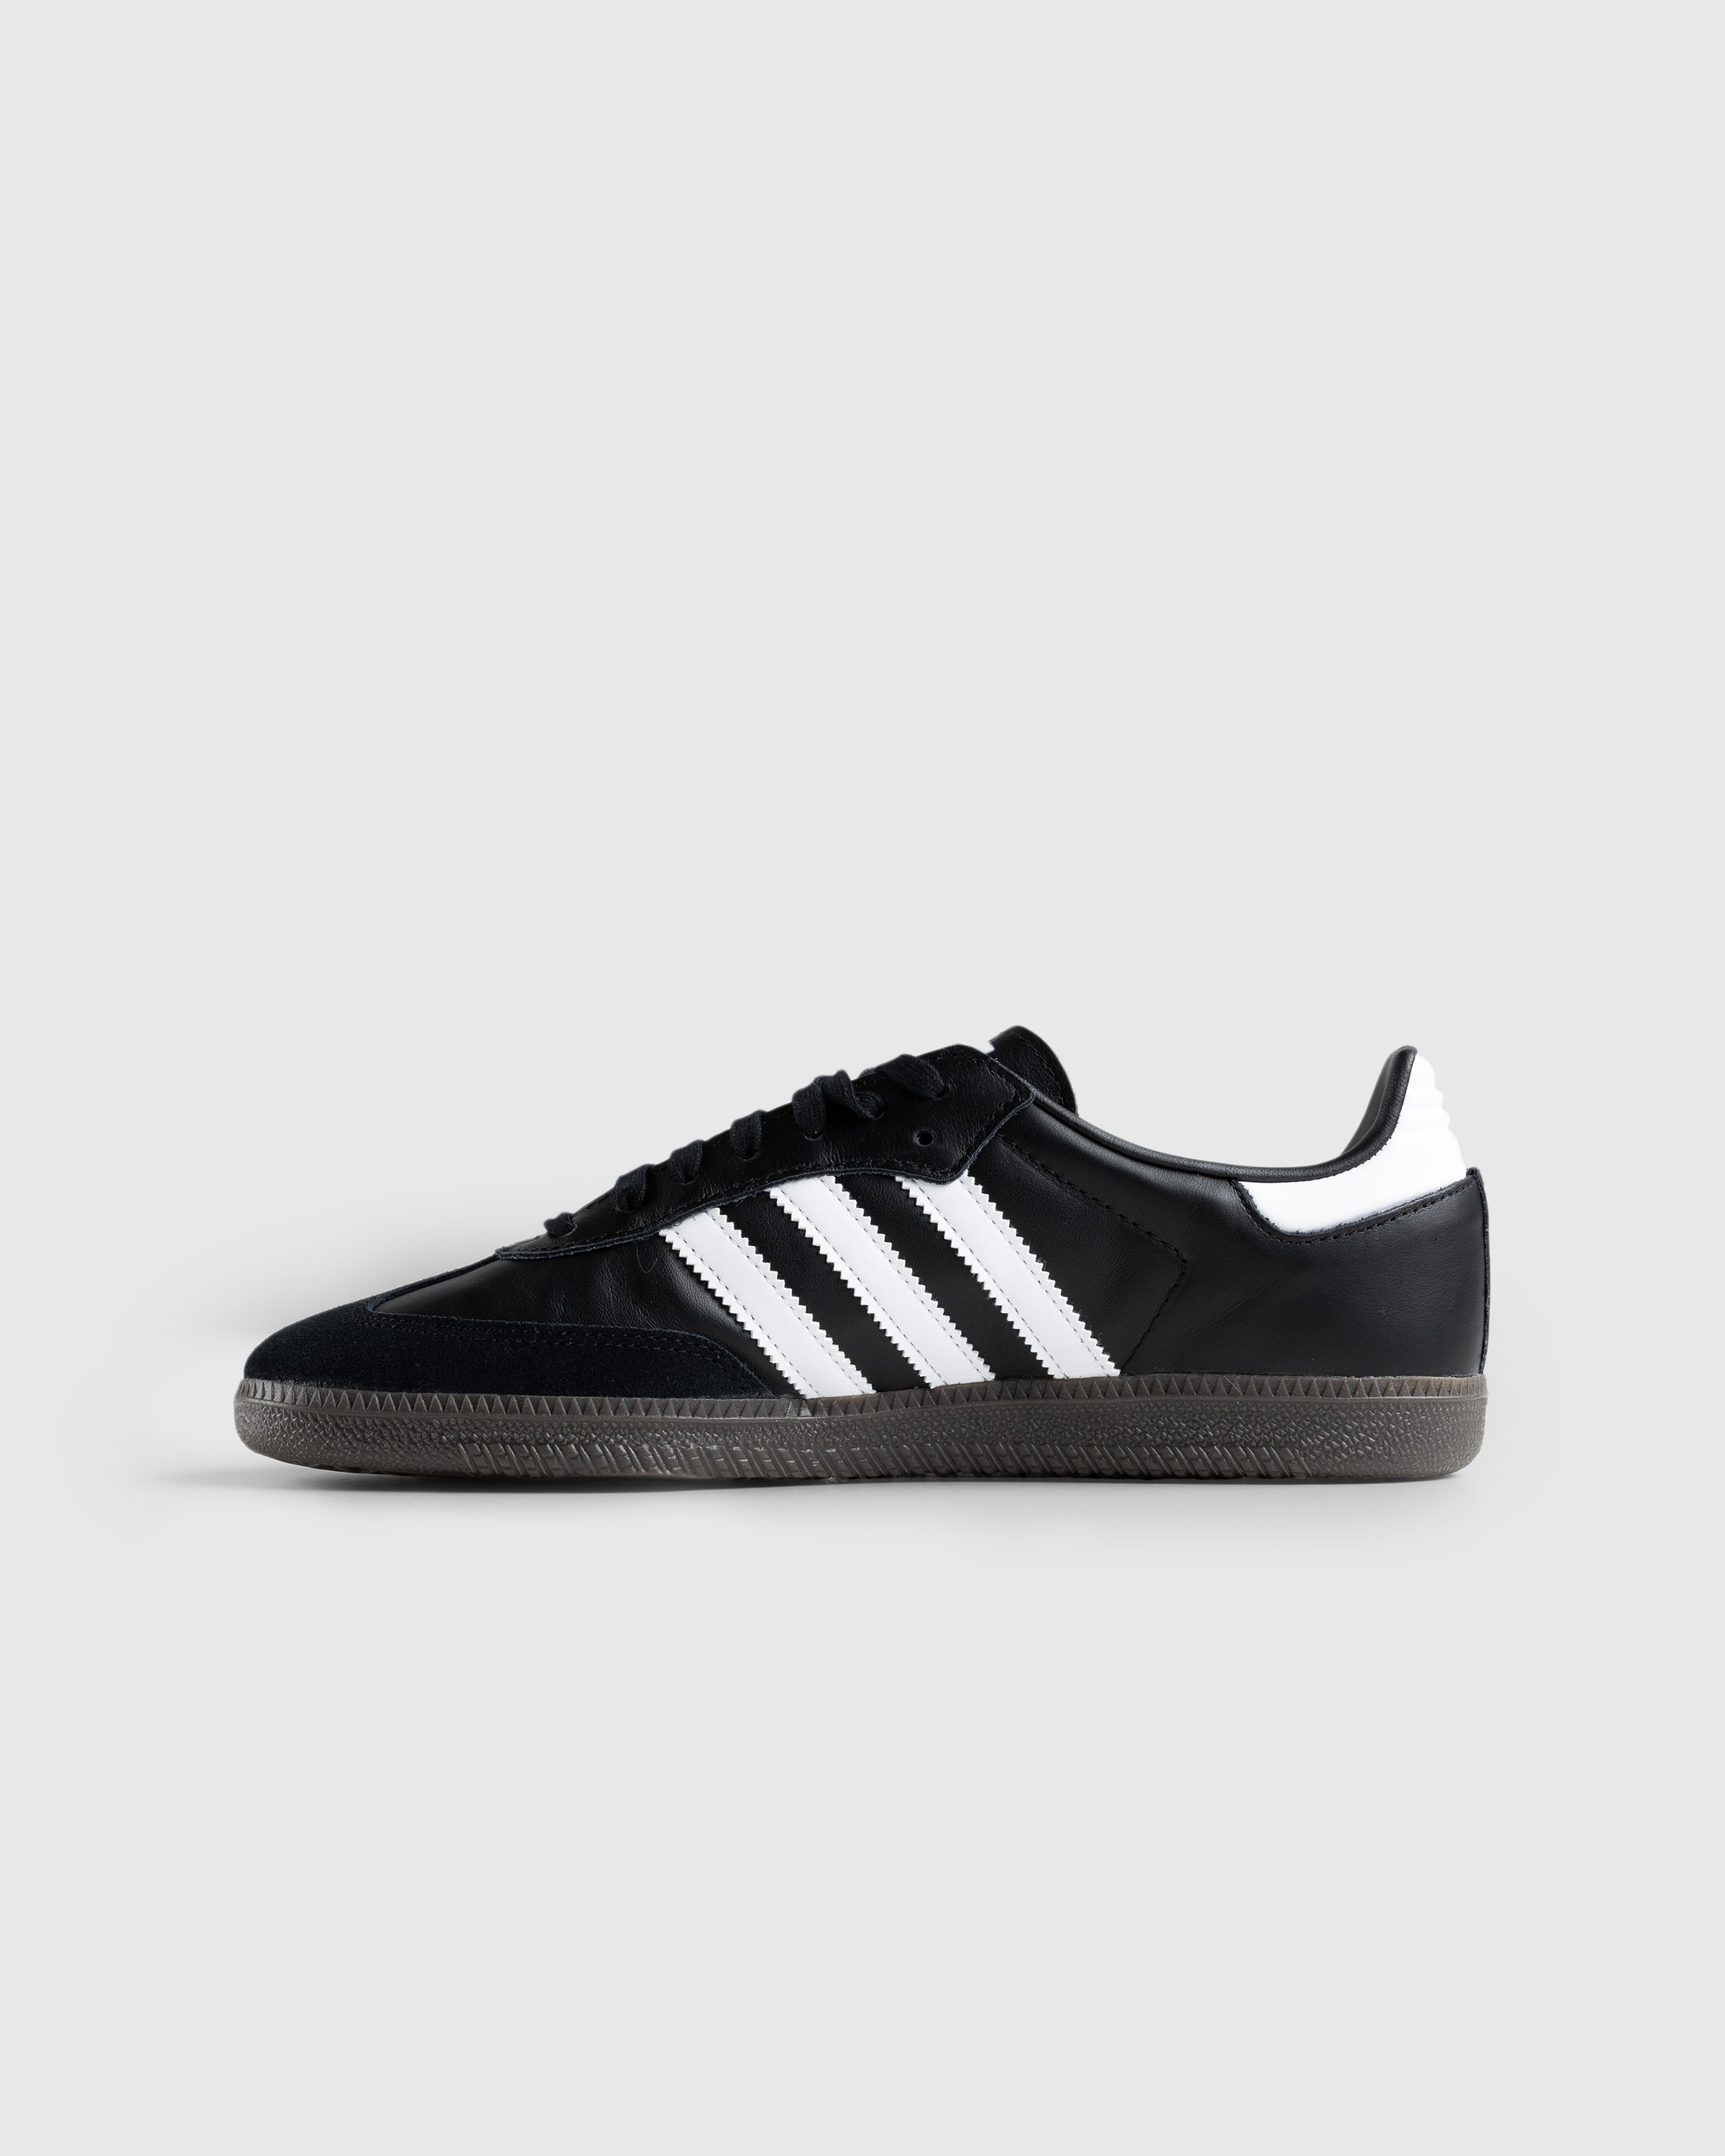 Adidas - Samba OG Black/White/Gum - Footwear - Black - Image 2